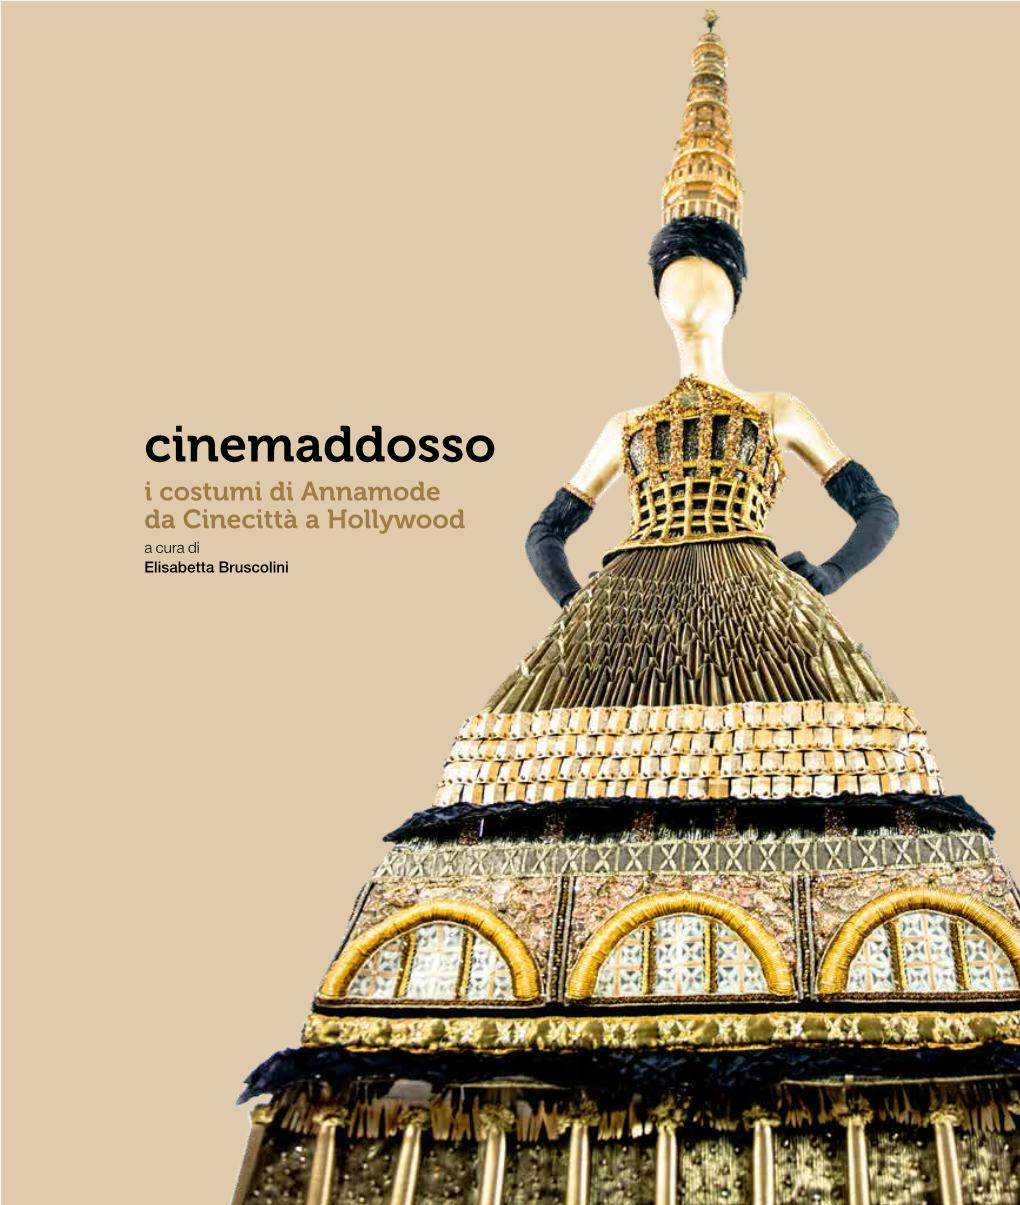 Cinemaddosso